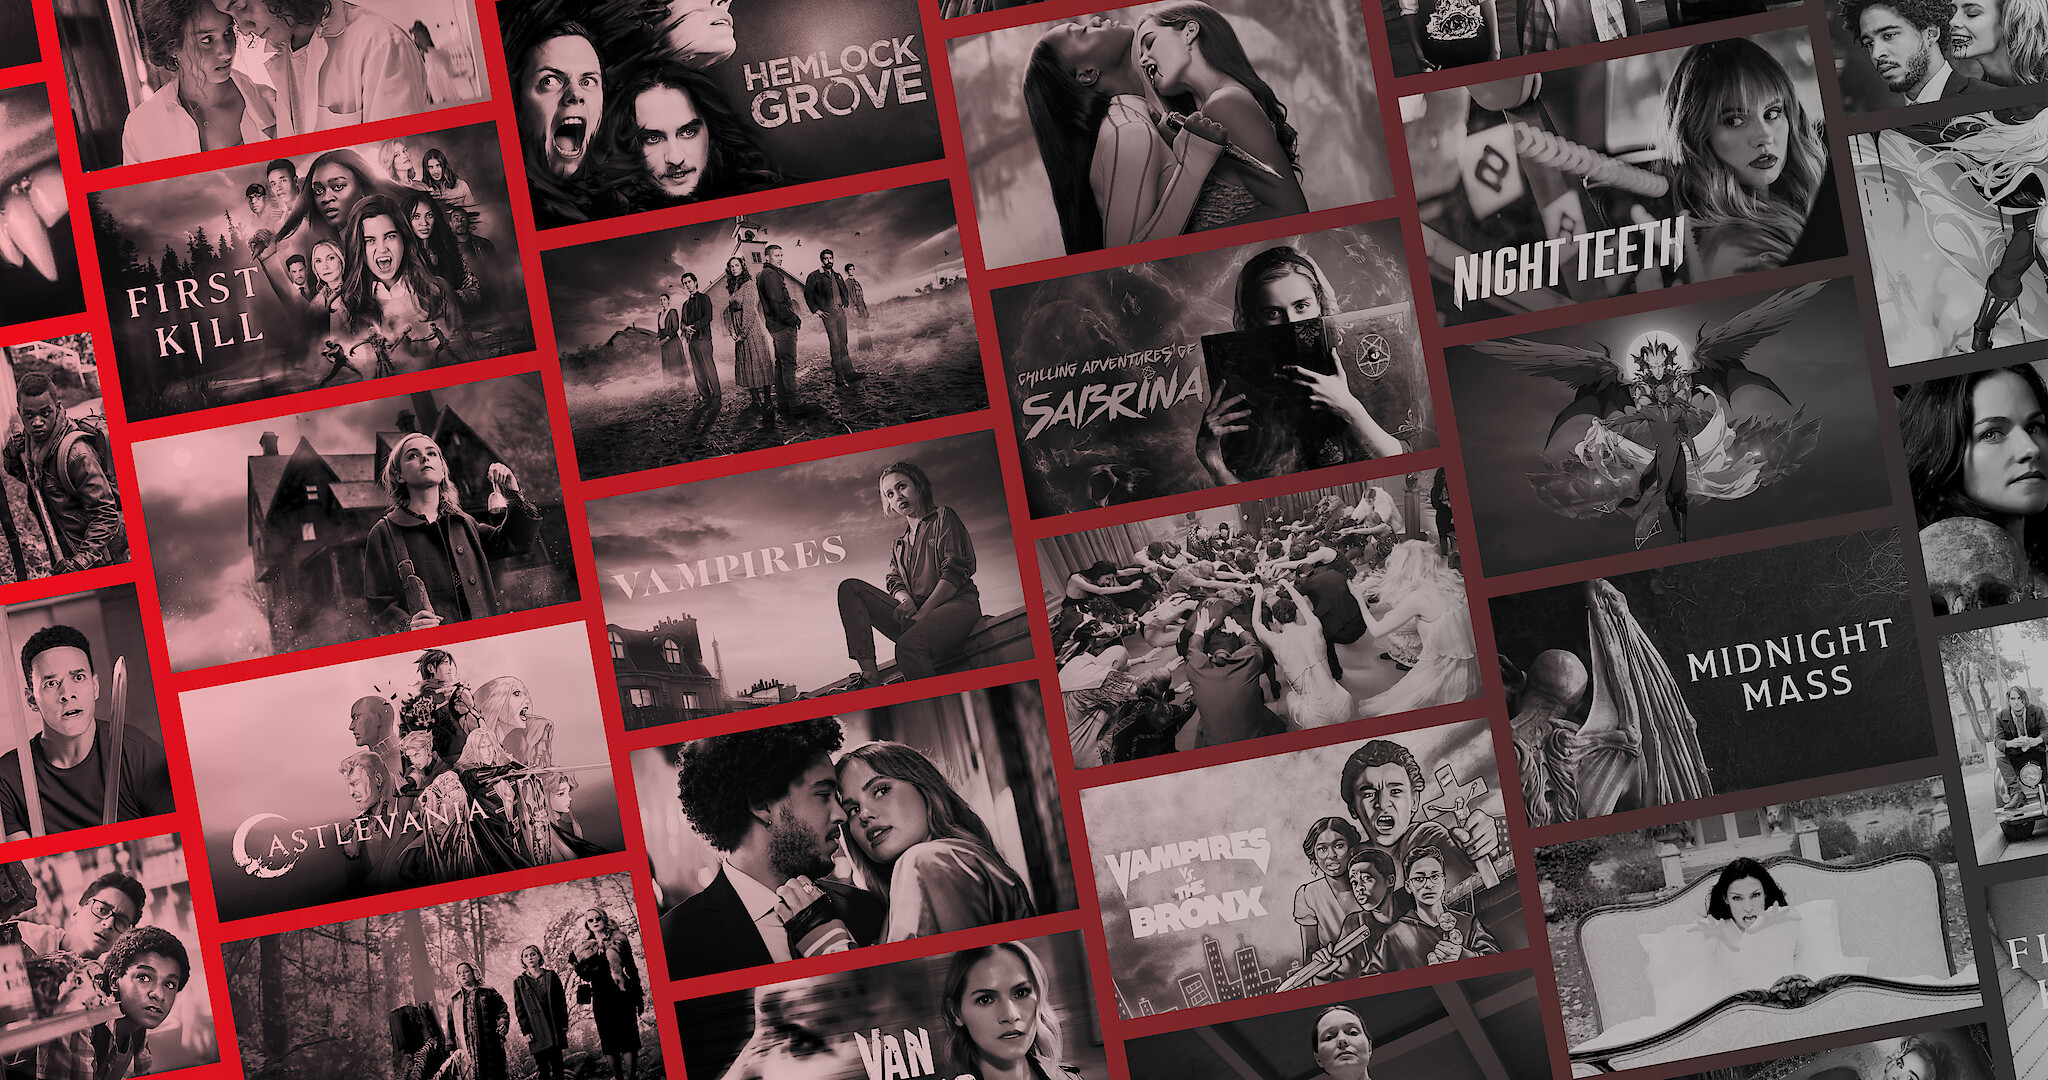 12 Best Historical TV Shows to Watch on Netflix - Netflix Tudum